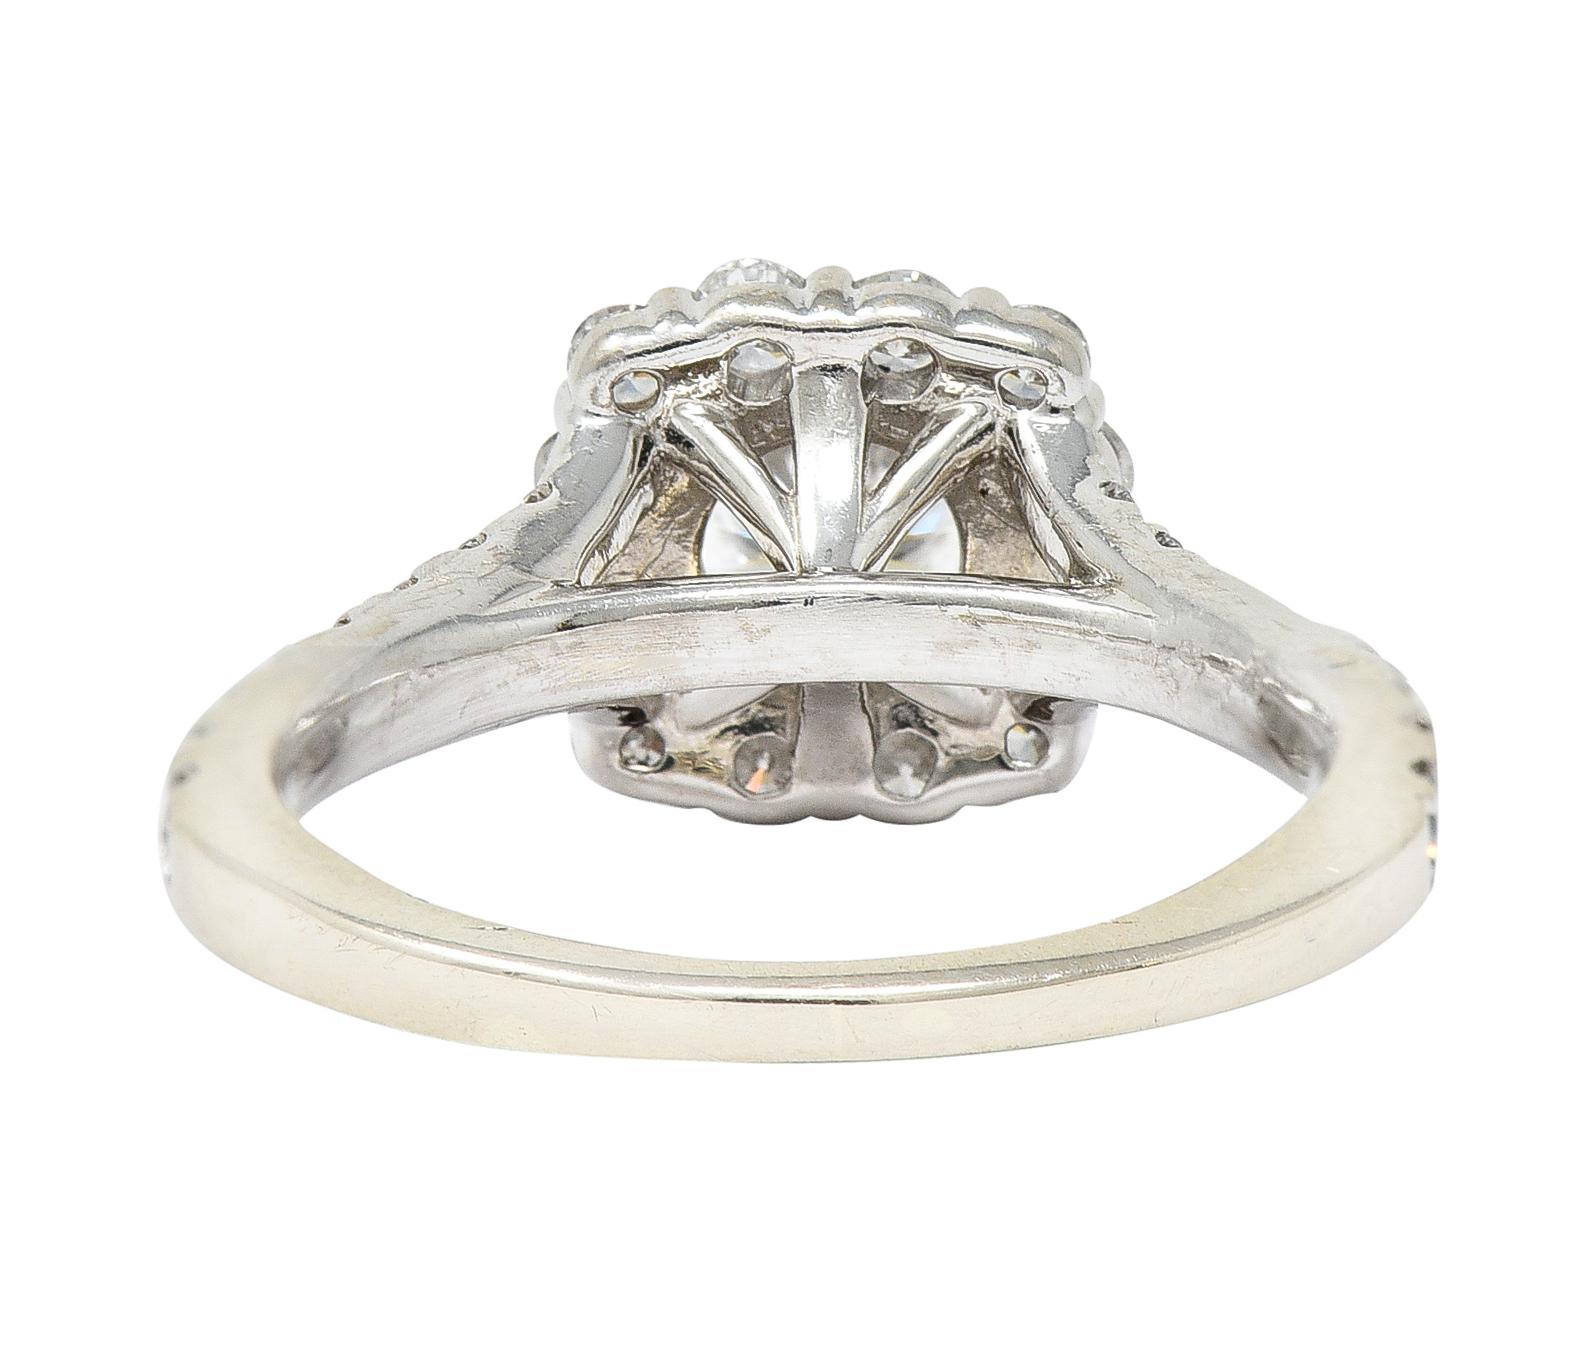 Brilliant Cut 1.18 Carats Ideal Cut Diamond 14 Karat White Gold Cushion Halo Engagement Ring